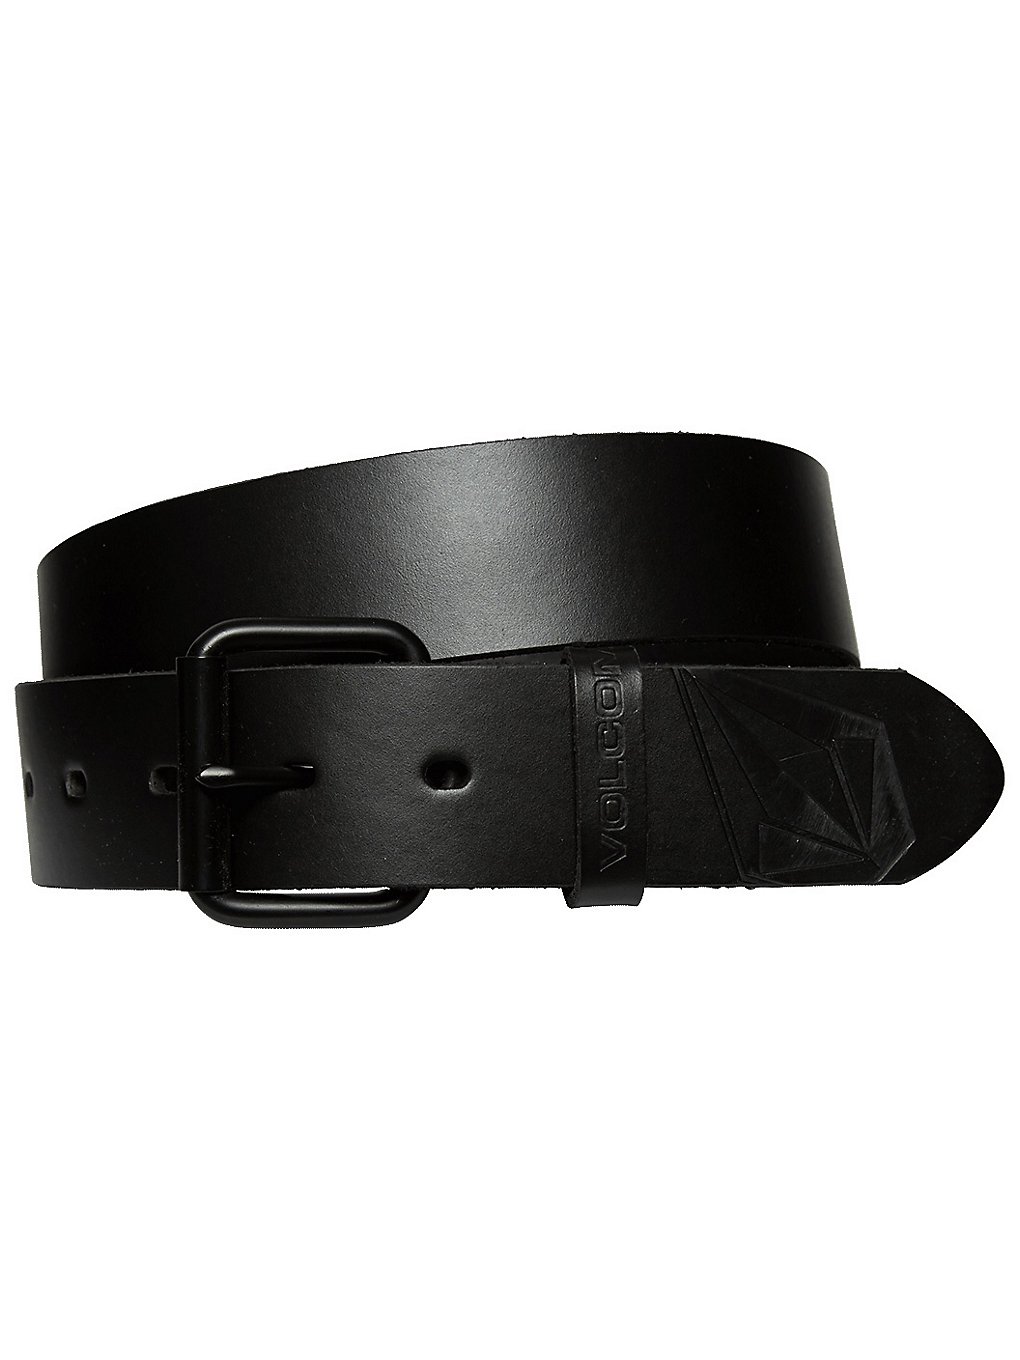 Volcom straight leather belt musta, volcom